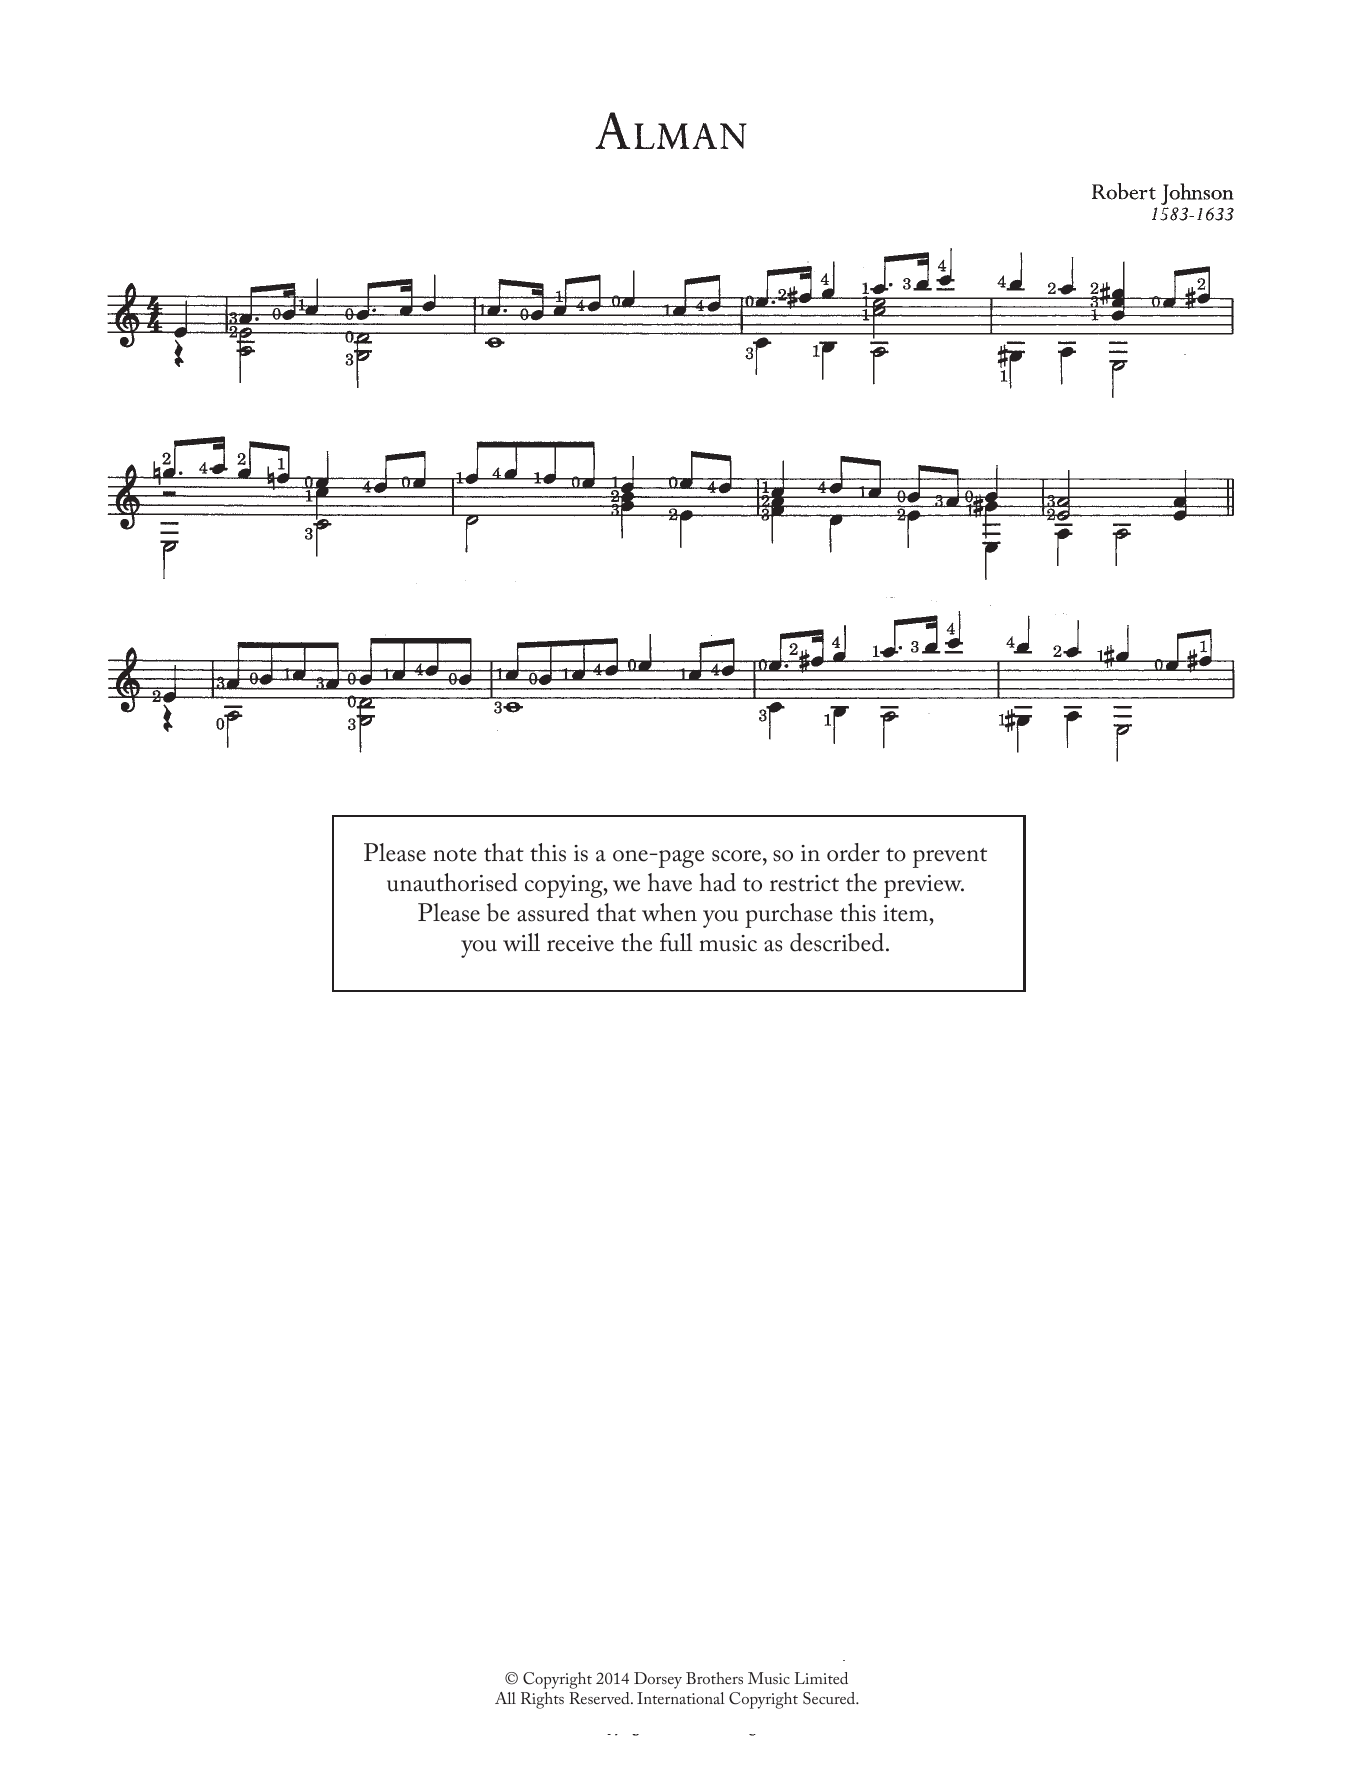 Download Robert Johnson II Alman Sheet Music